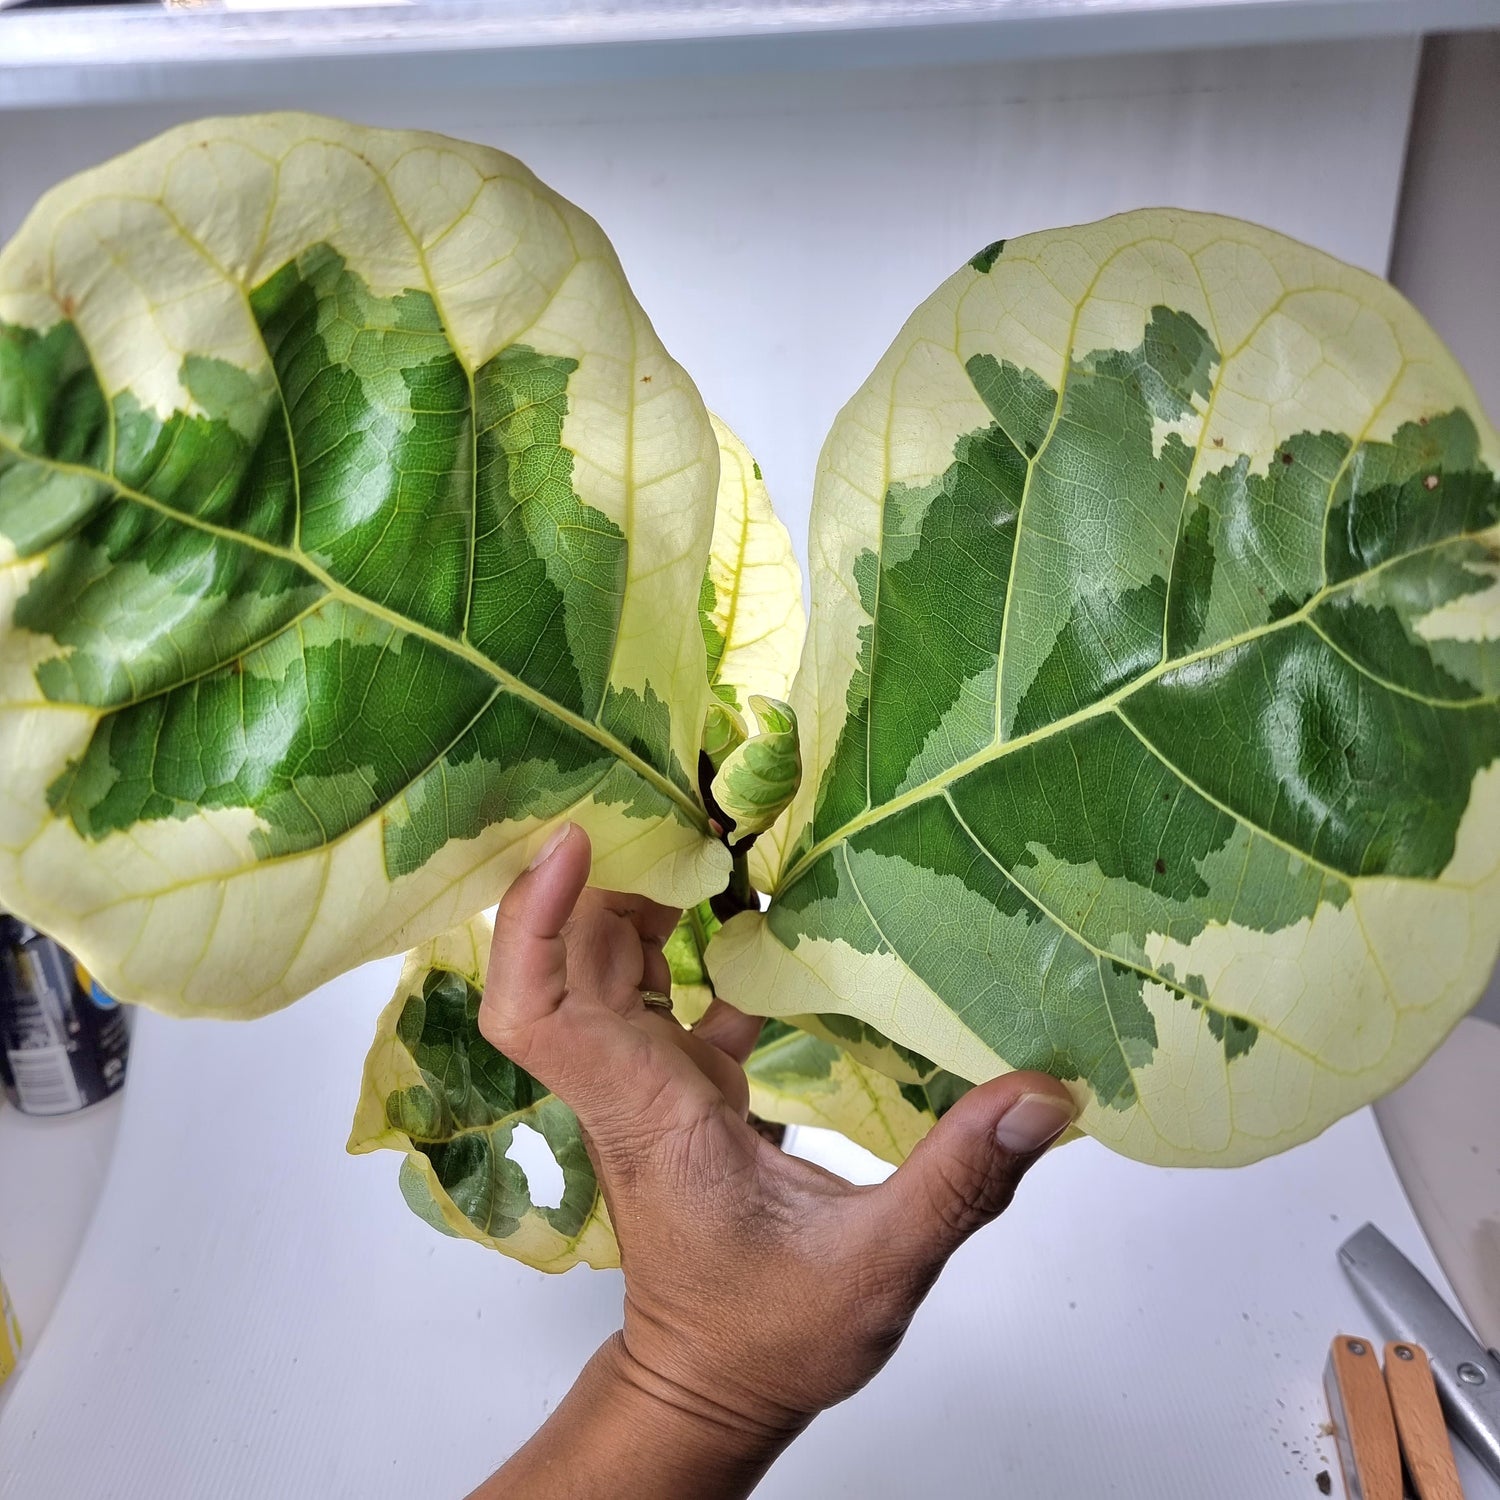 rare Variegated Ficus lyrata AKA Fiddle Leaf Fig for sale in Perth Australia